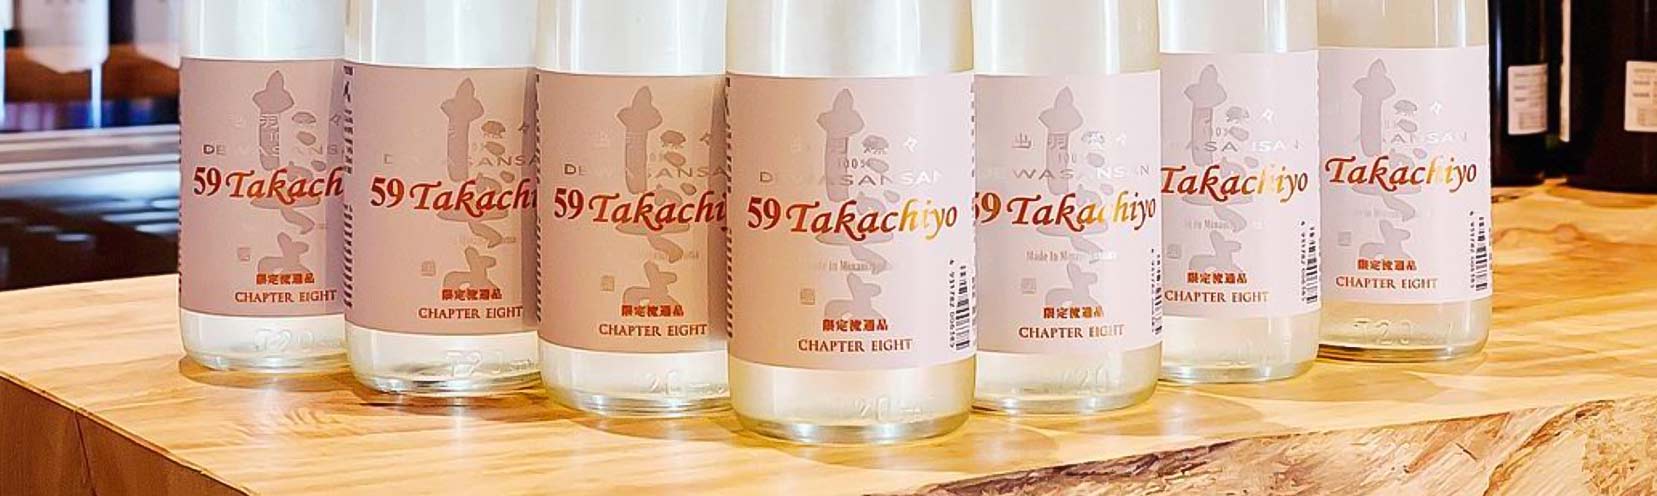 Takachiyo59 純米吟醸 出羽燦々